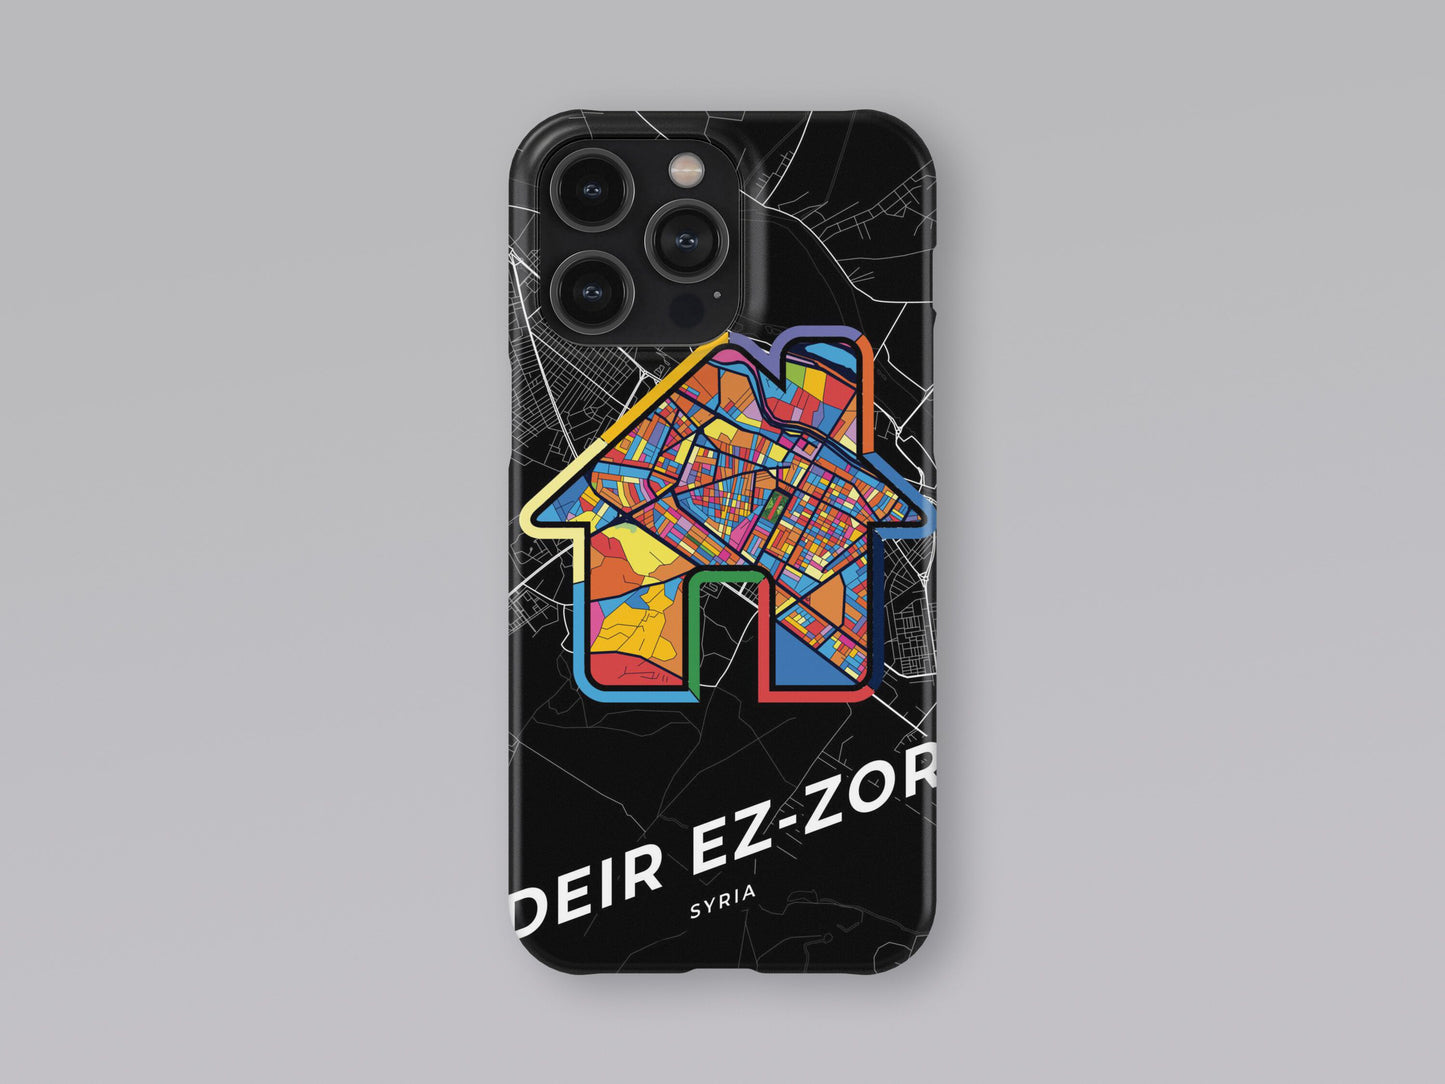 Deir Ez-Zor Syria slim phone case with colorful icon. Birthday, wedding or housewarming gift. Couple match cases. 3